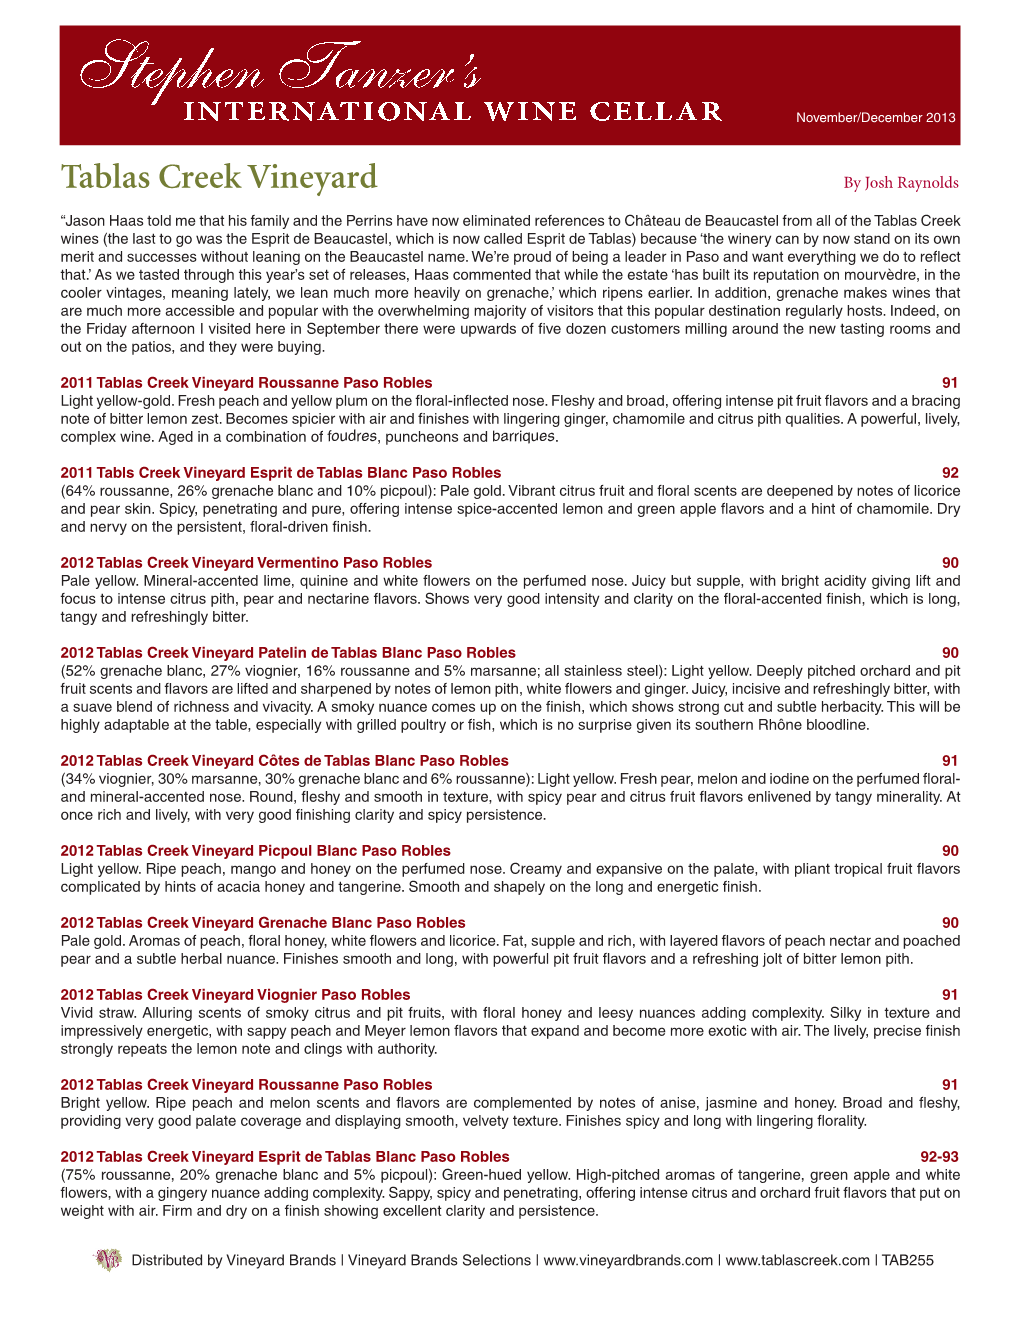 Tablas Creek Vineyard by Josh Raynolds